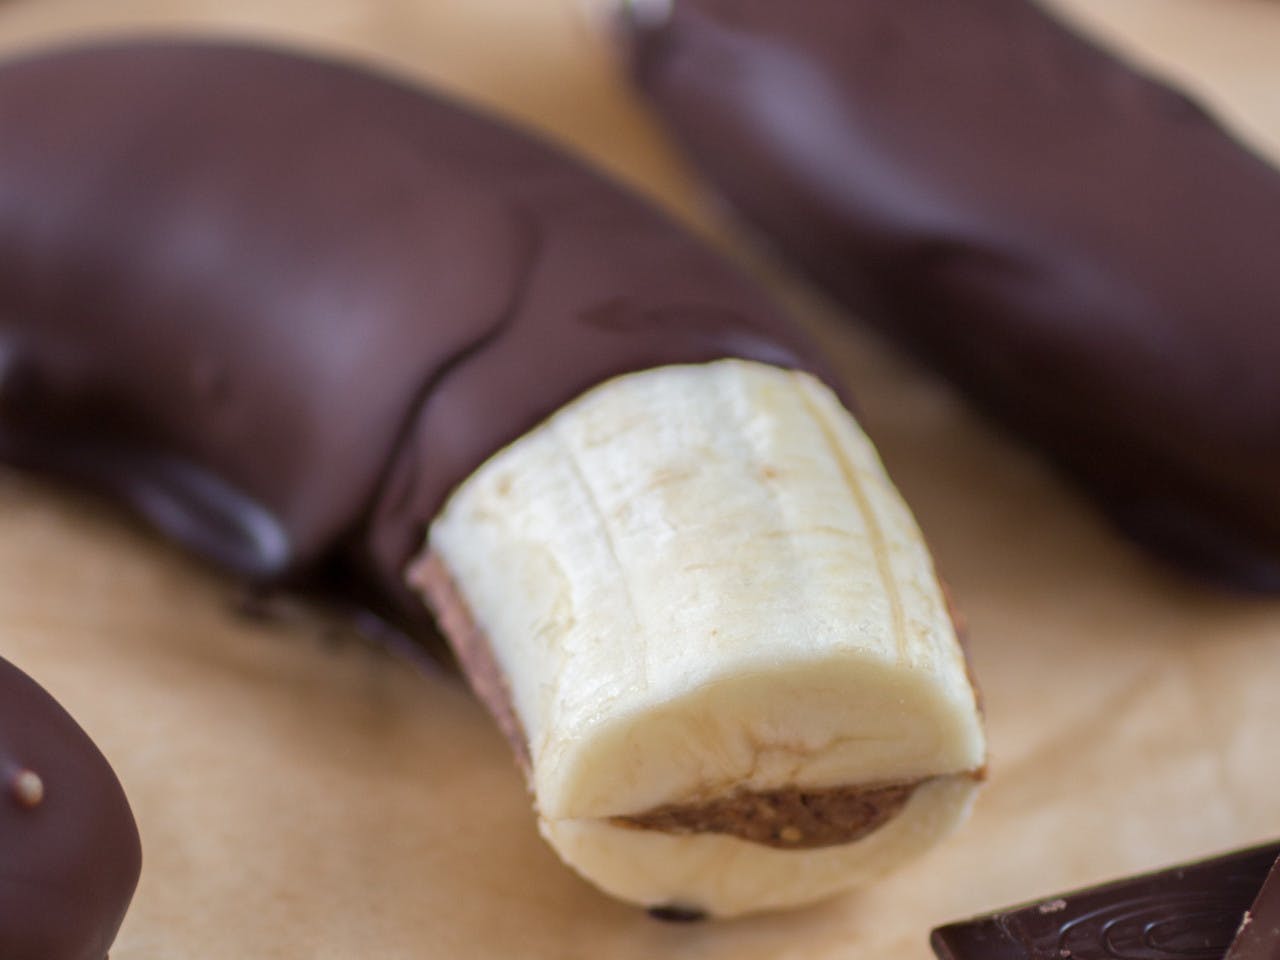 Banana ice creams with chocolate